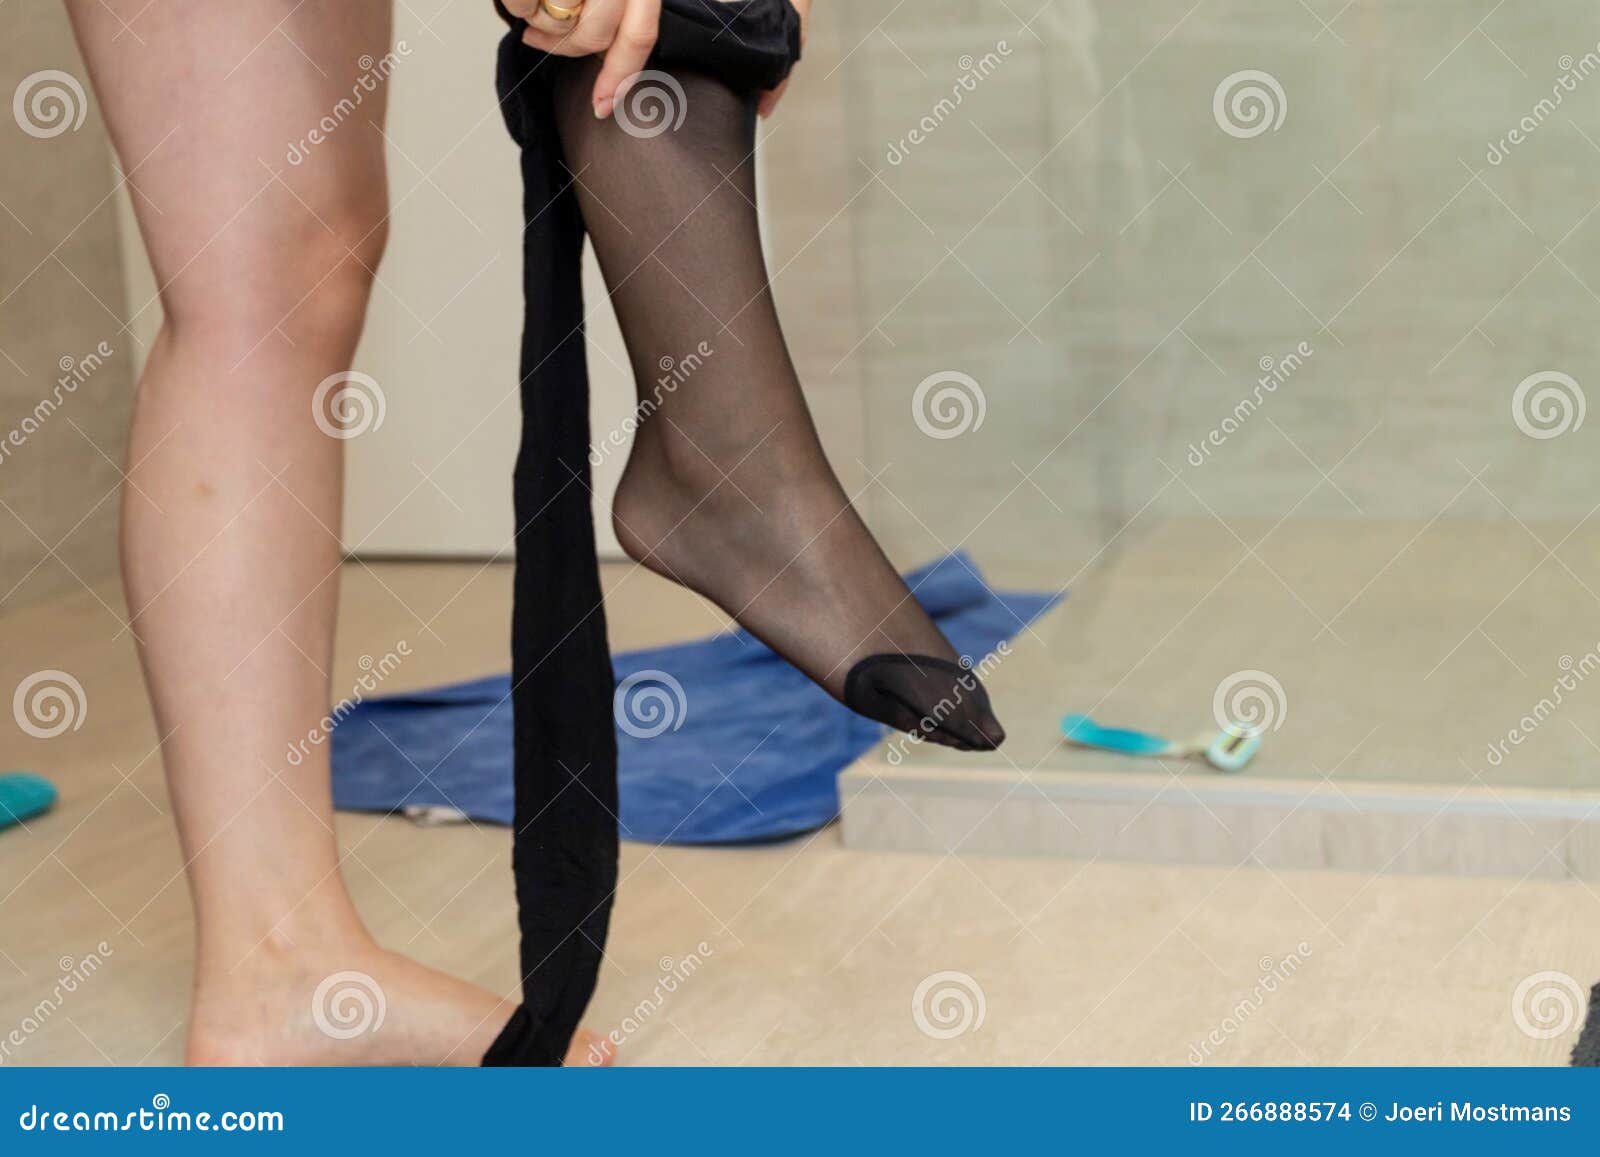 Woman Pulling Stockings Stock Photos